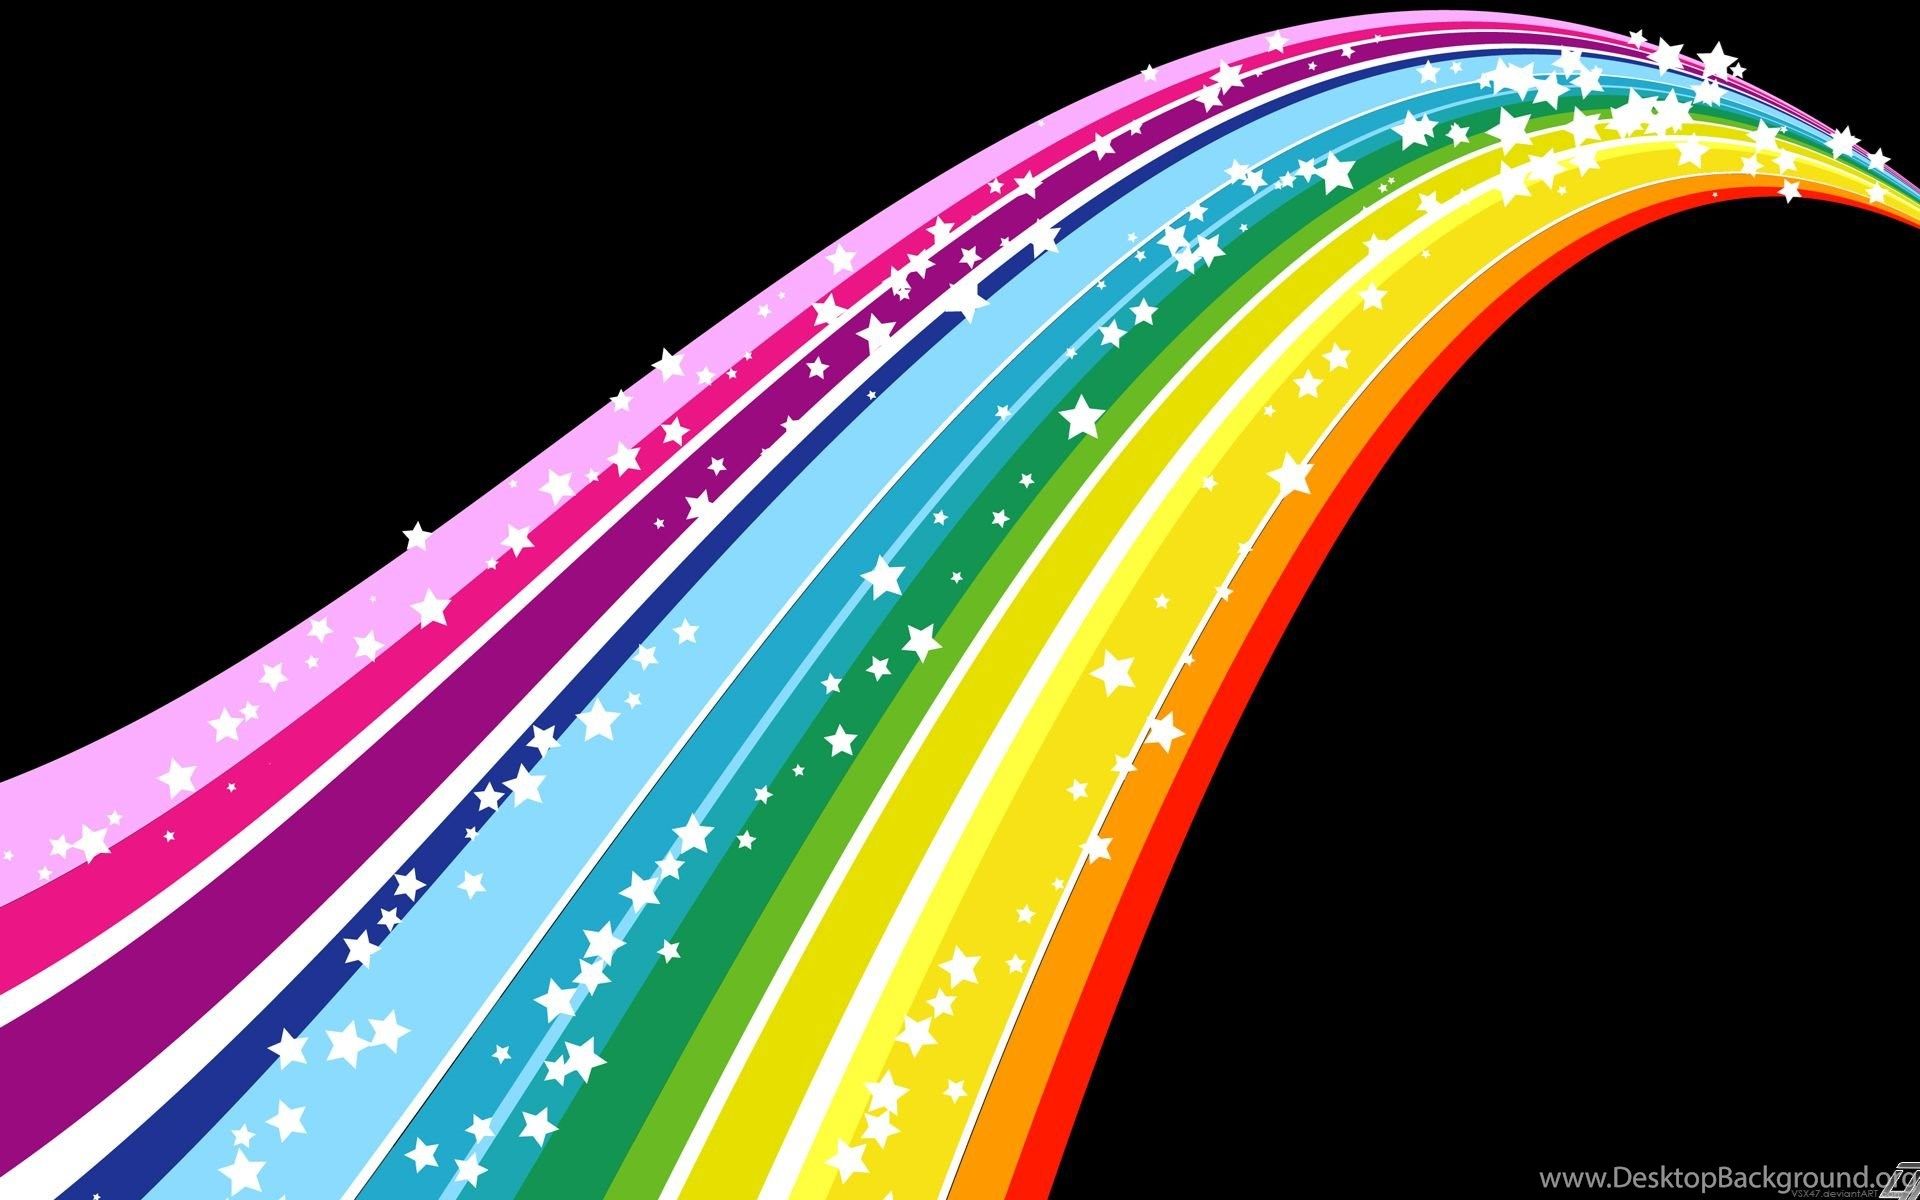 Retro Rainbow, Colorful, Stars, 1920x1200 HD Wallpaper And FREE. Desktop Background